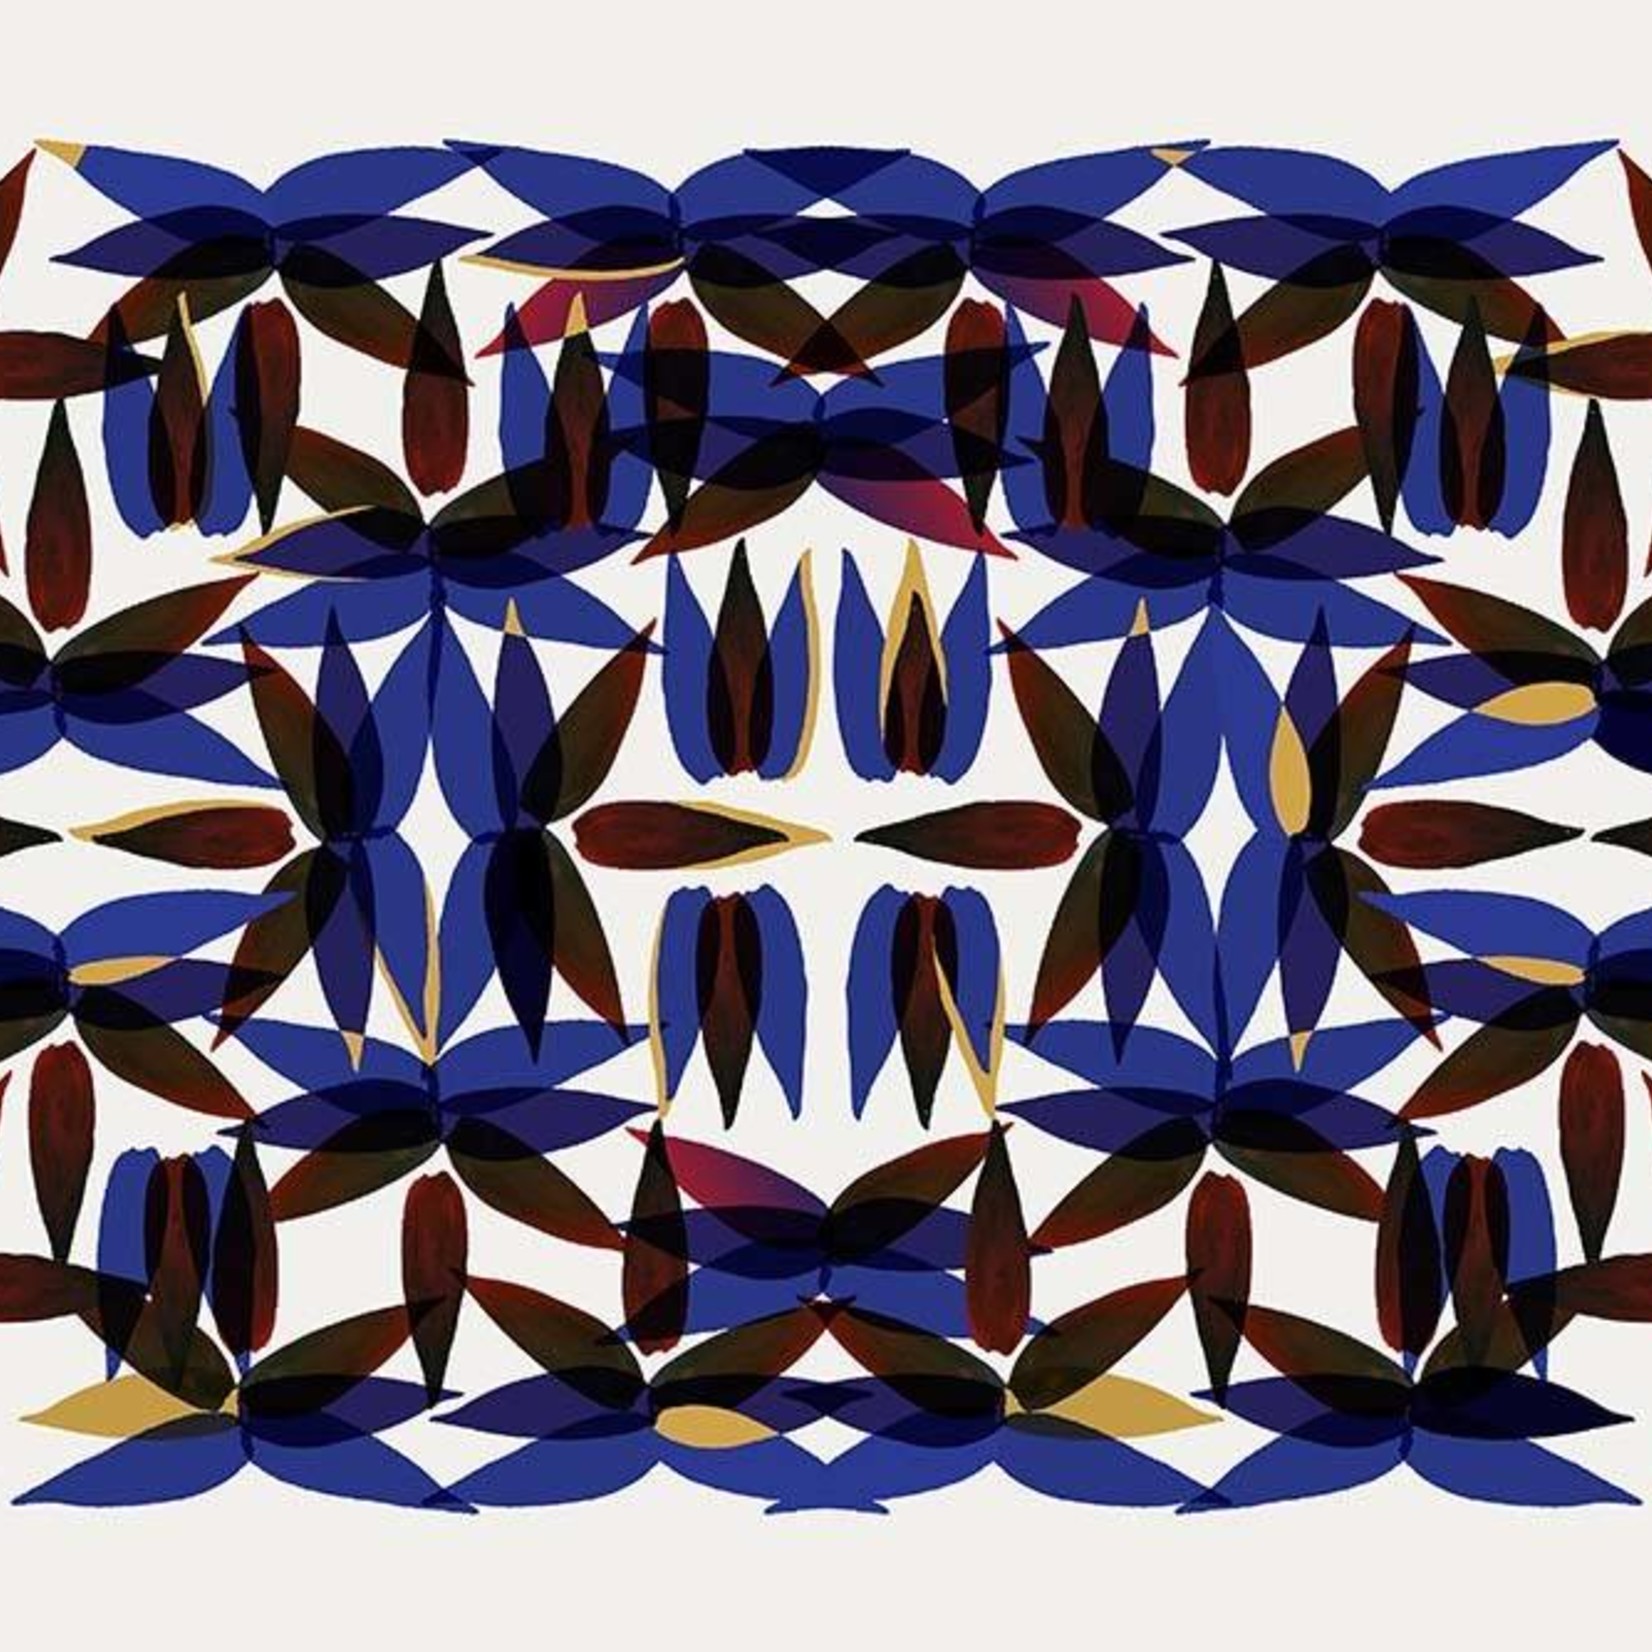 Framed Print on Rag Paper: Kaleidoscope View in Blue